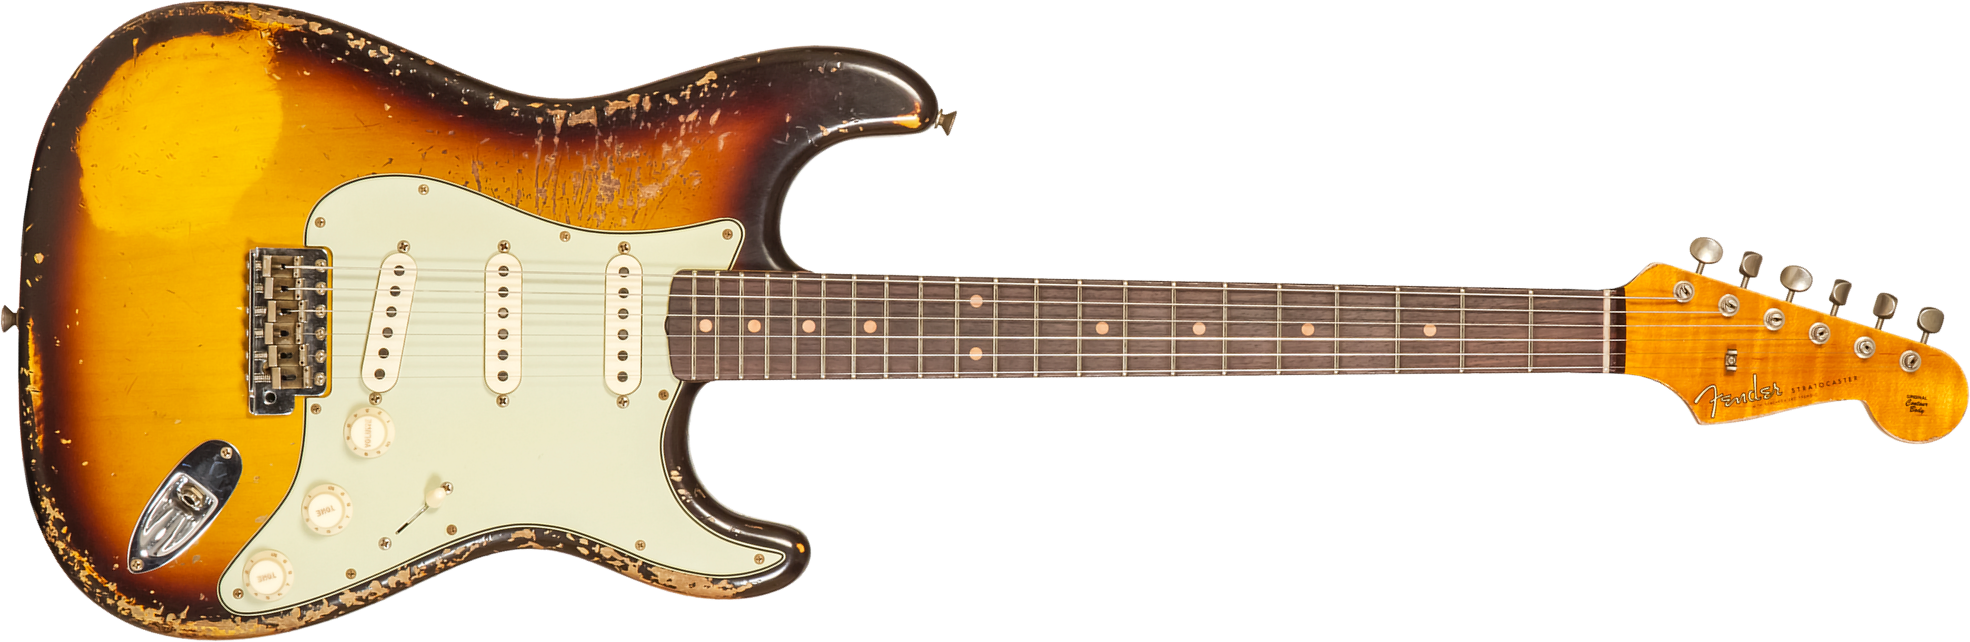 Fender Custom Shop Strat 1959 3s Trem Rw #cz571958 - Super Heavy Relic Aged Chocolate 3-color Sunburst - Elektrische gitaar in Str-vorm - Main picture